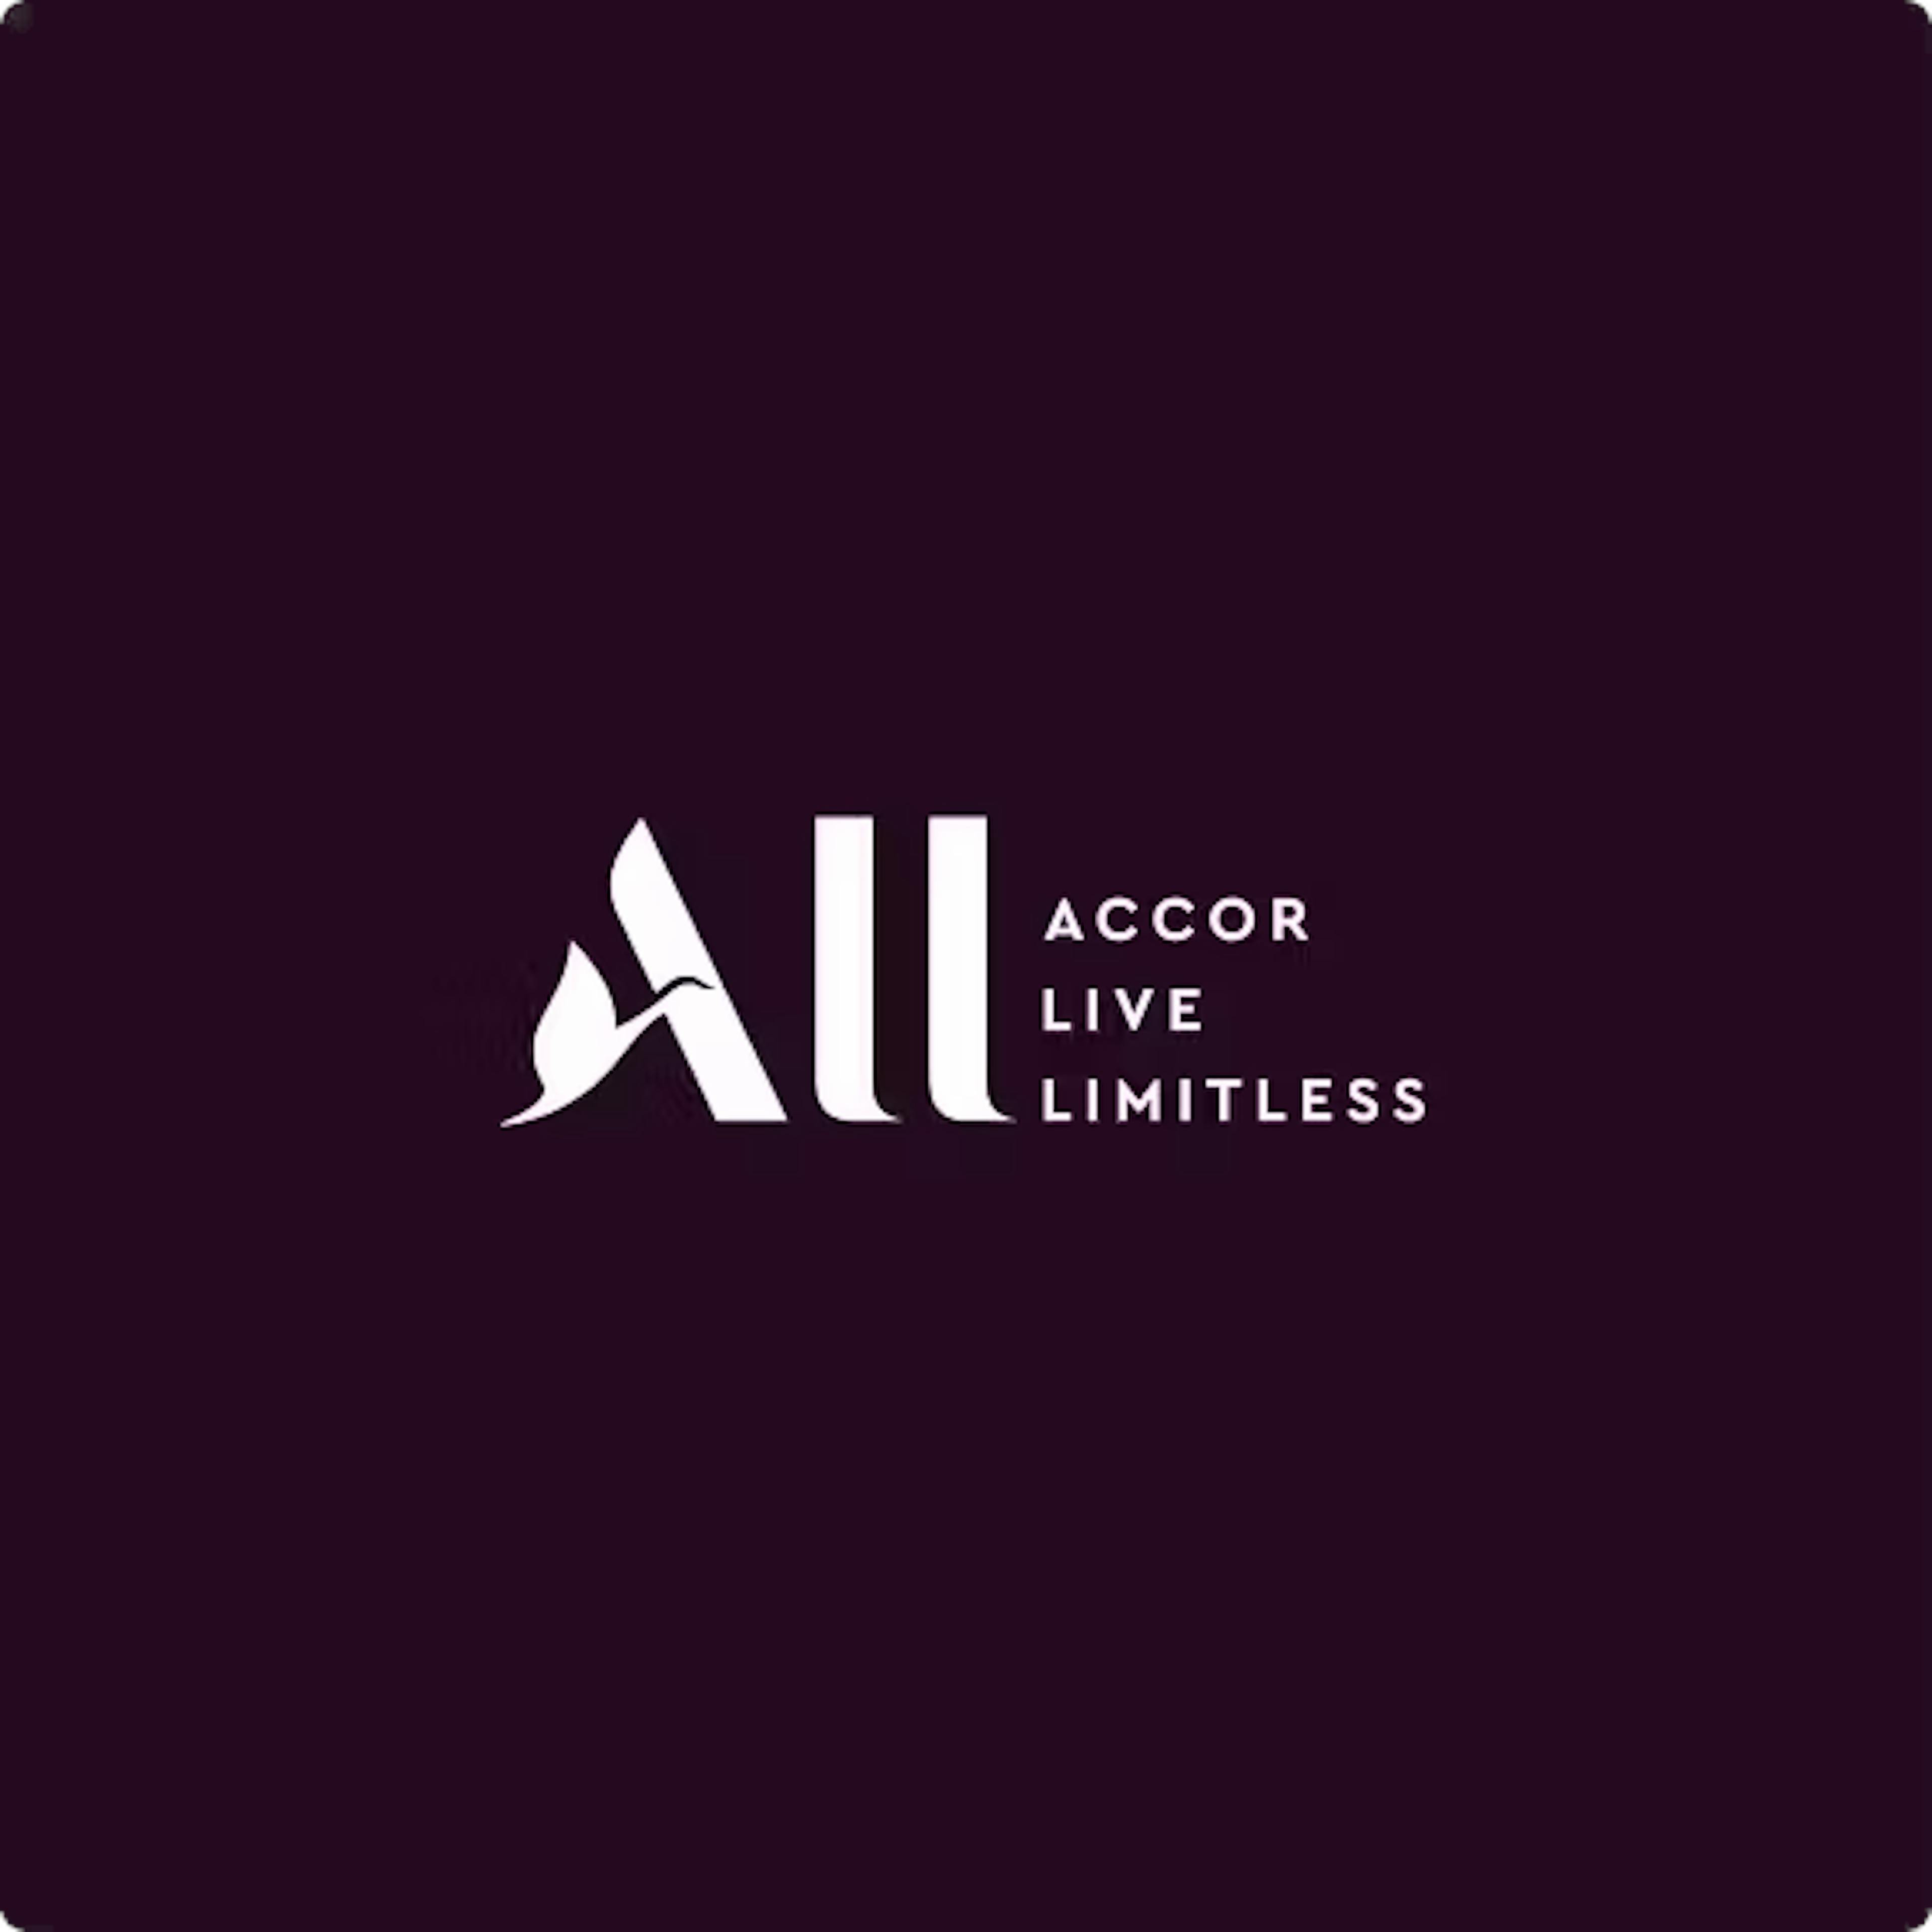 Accor white logo on dark purple background